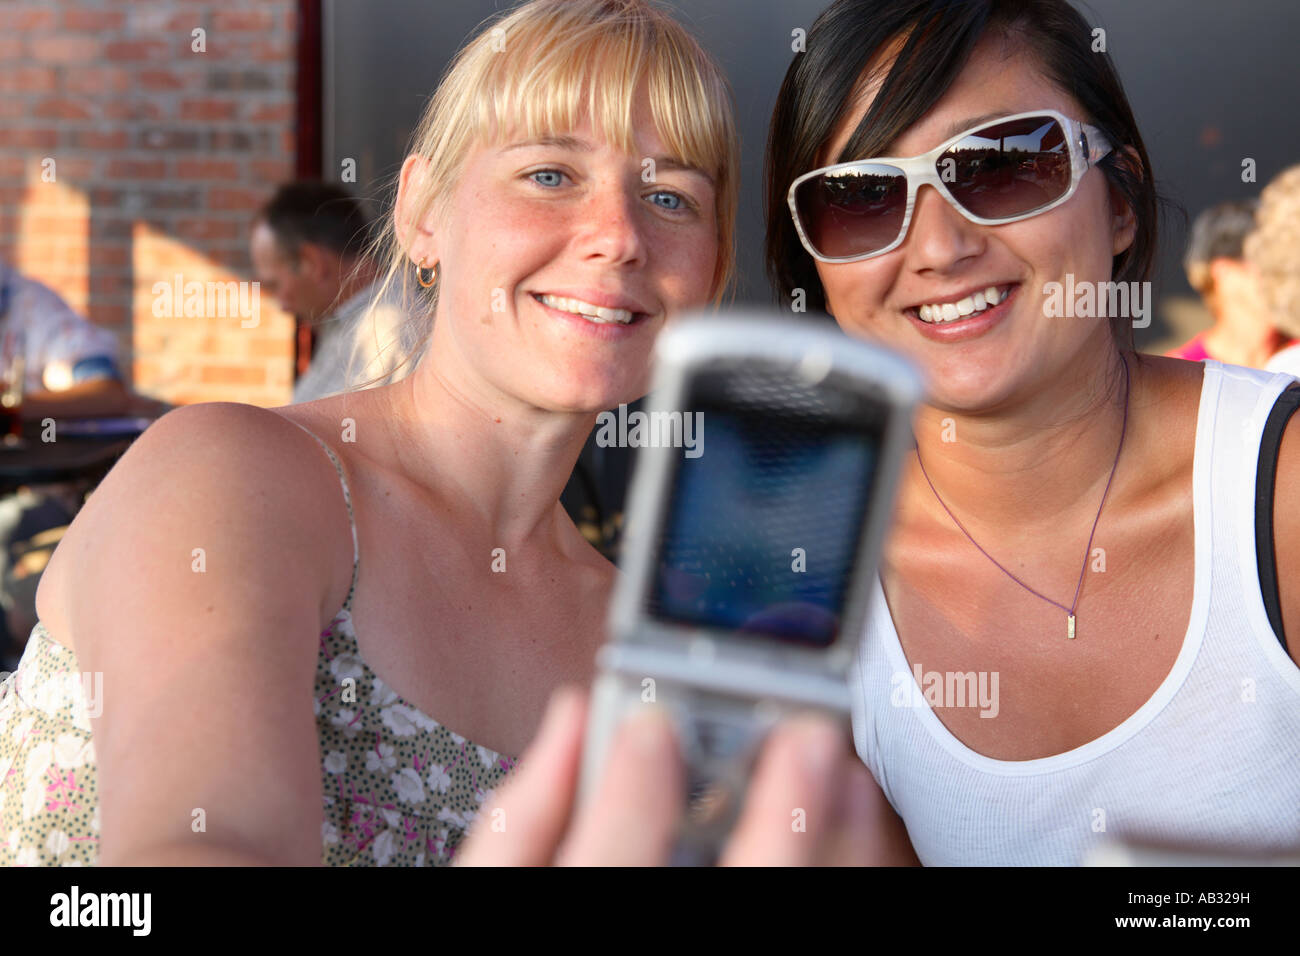 02:20 Mädchen nehmen selbst Portrait mit Handy-Kamera Stockfoto